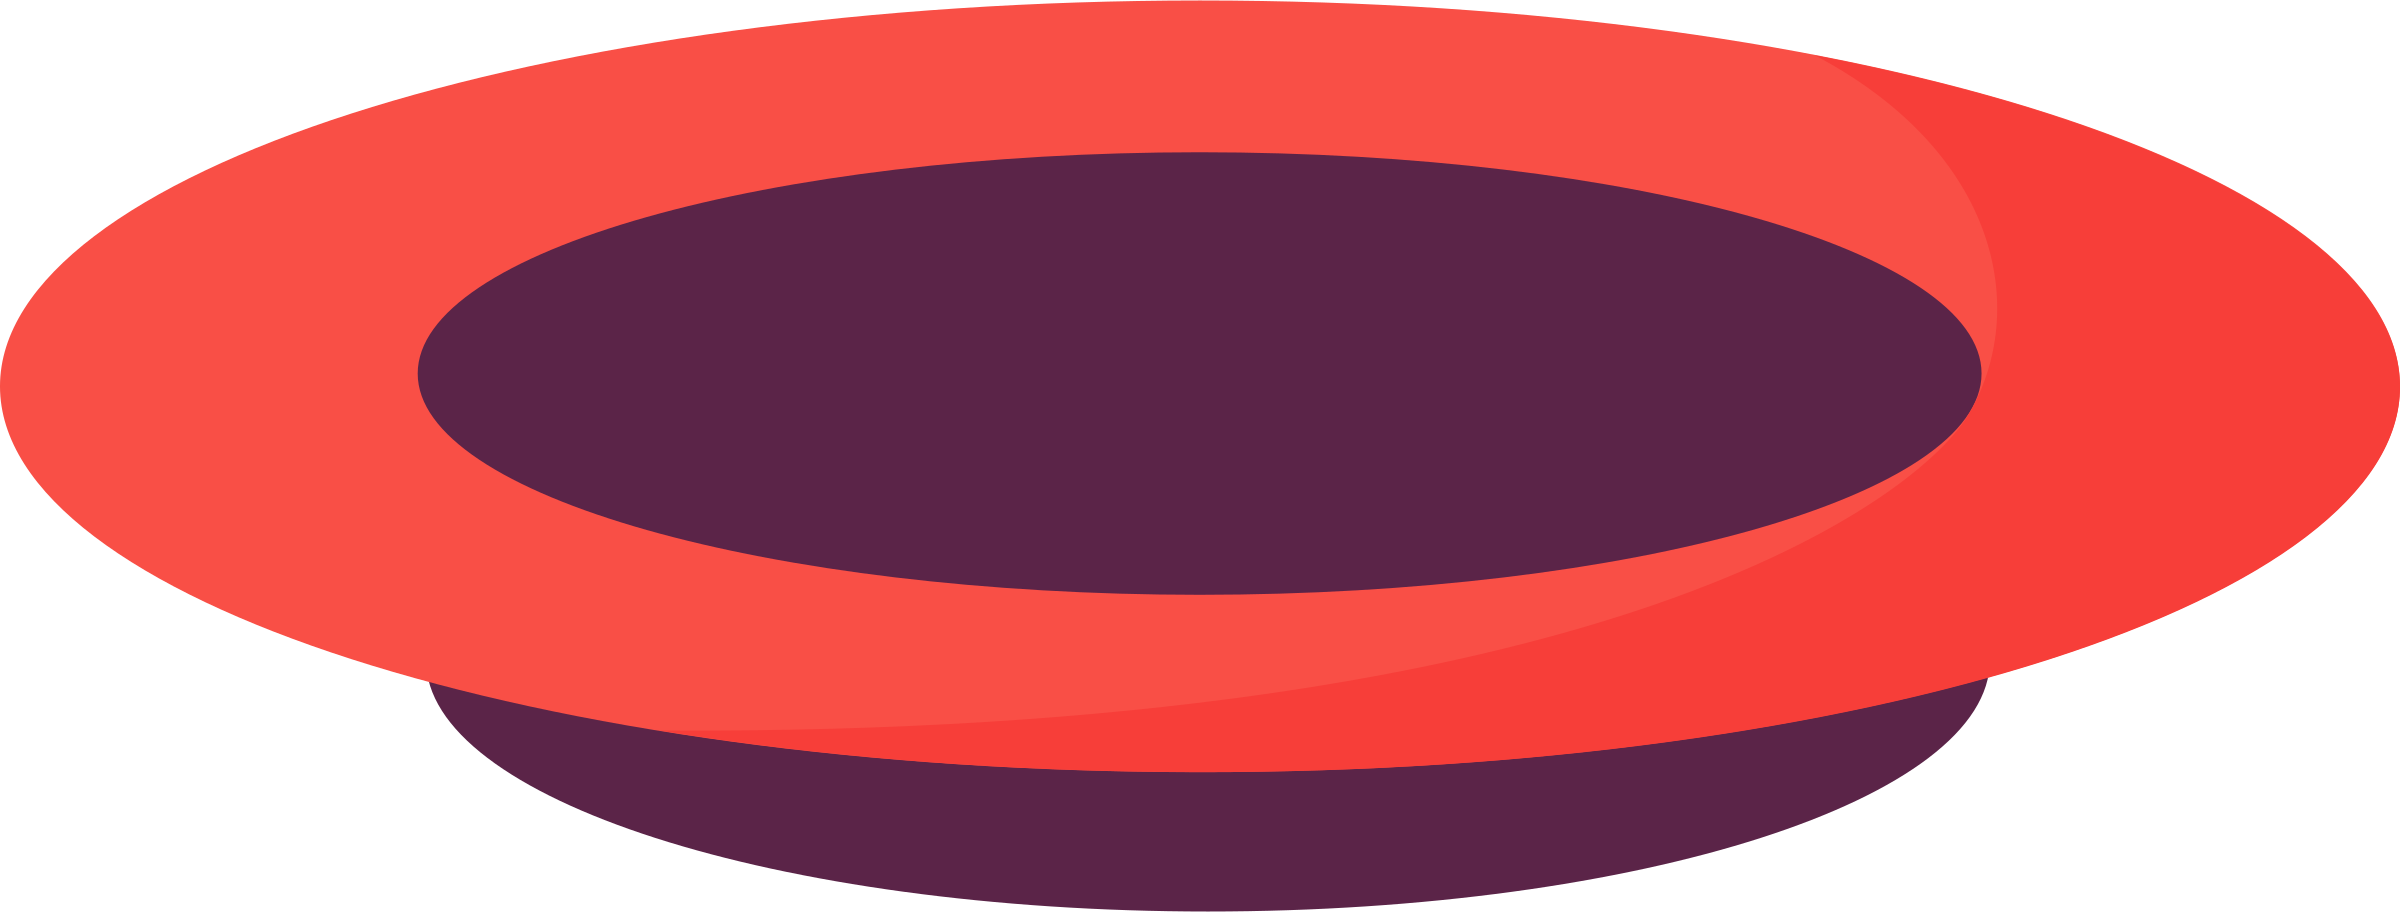 plate red Illustration in PNG, SVG